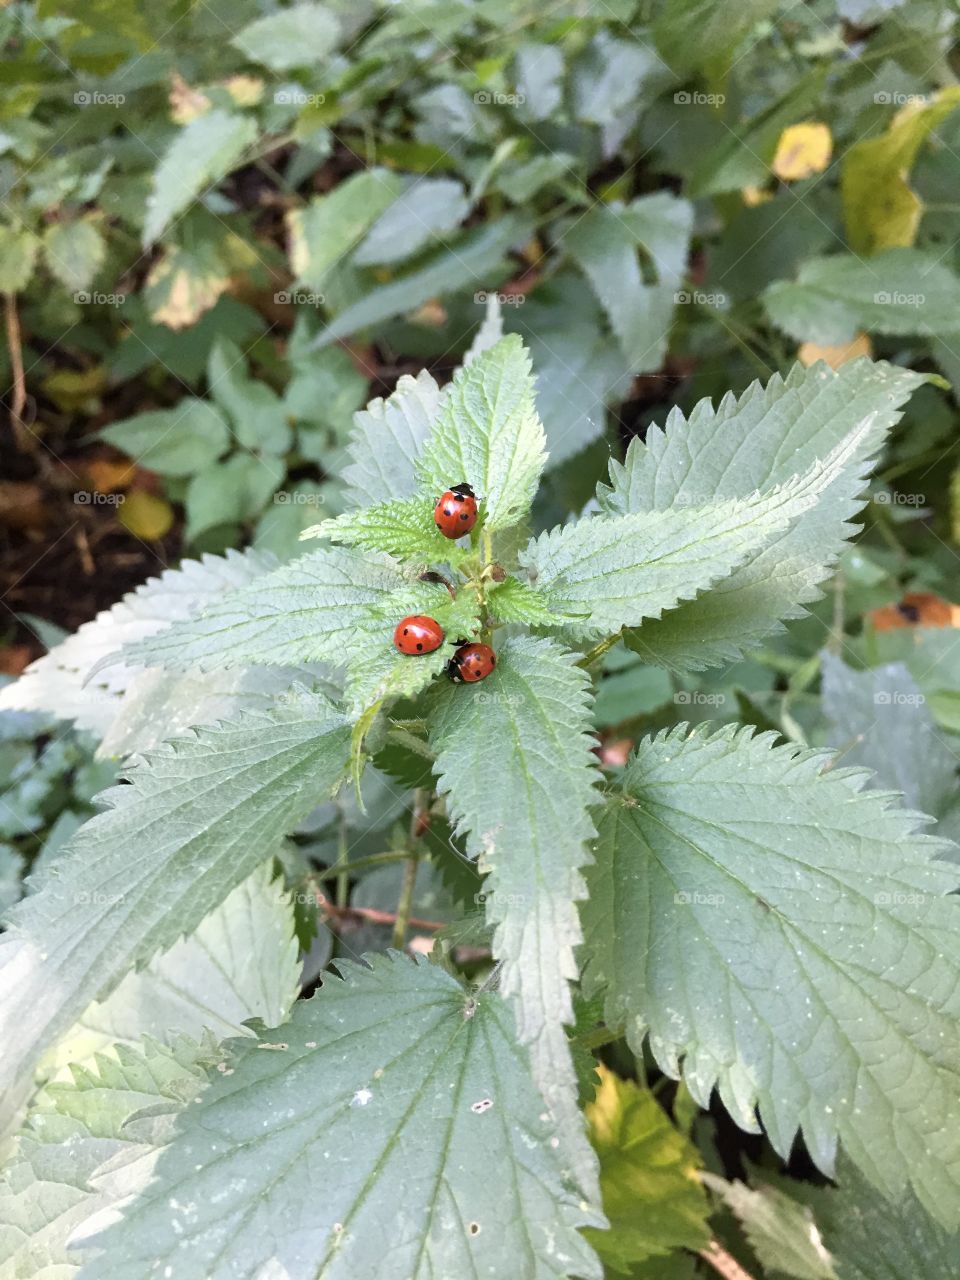 Cute little ladybugs